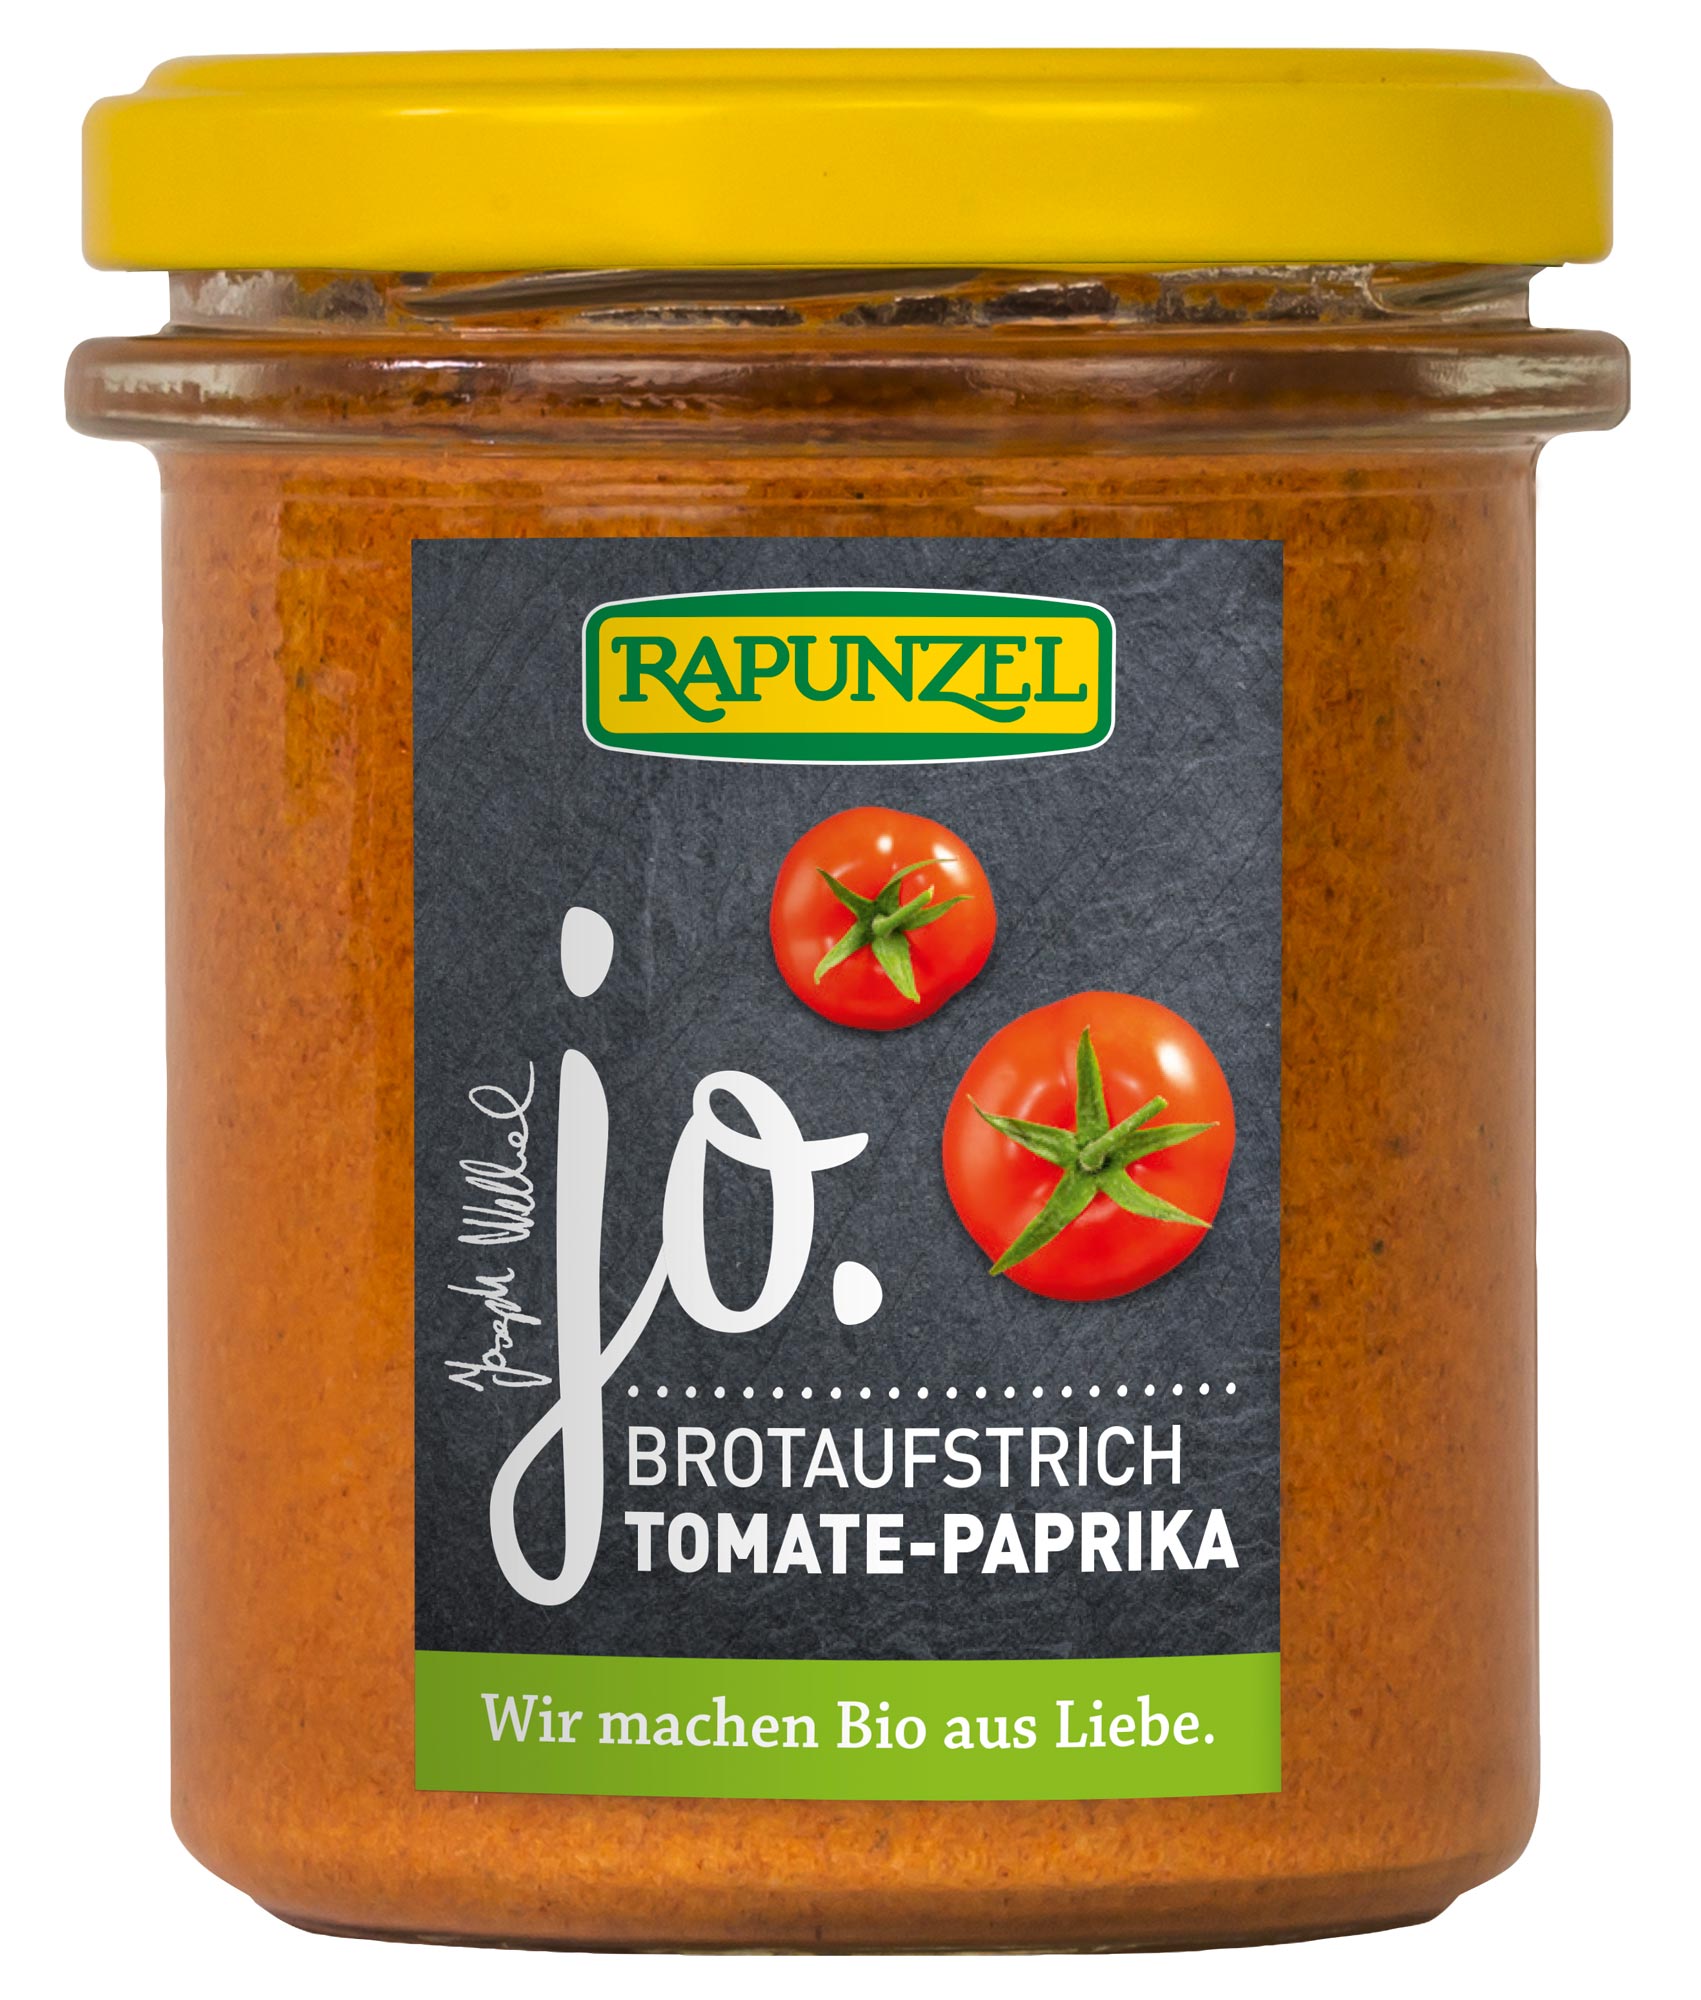 All-Bio Naturkost | Bio jo. Brotaufstrich Tomate-Paprika, 140 g ...